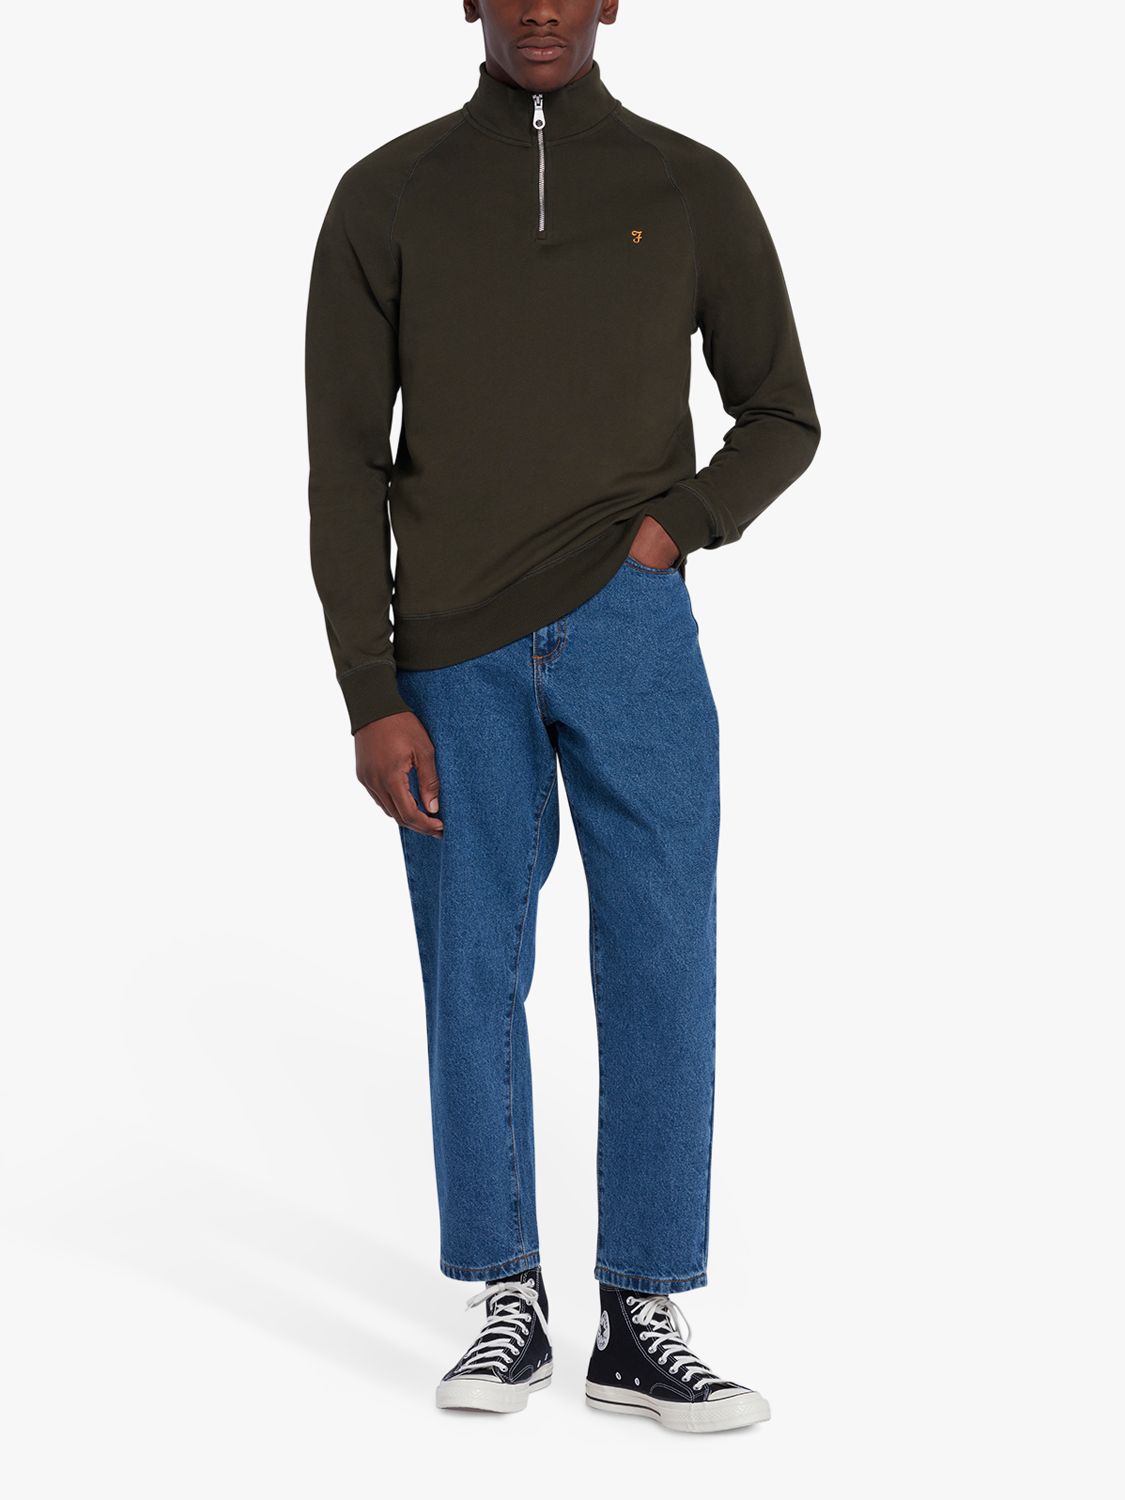 Farah Jim 1/4 Zip Slim Fit Organic Cotton Sweatshirt, Evergreen, S